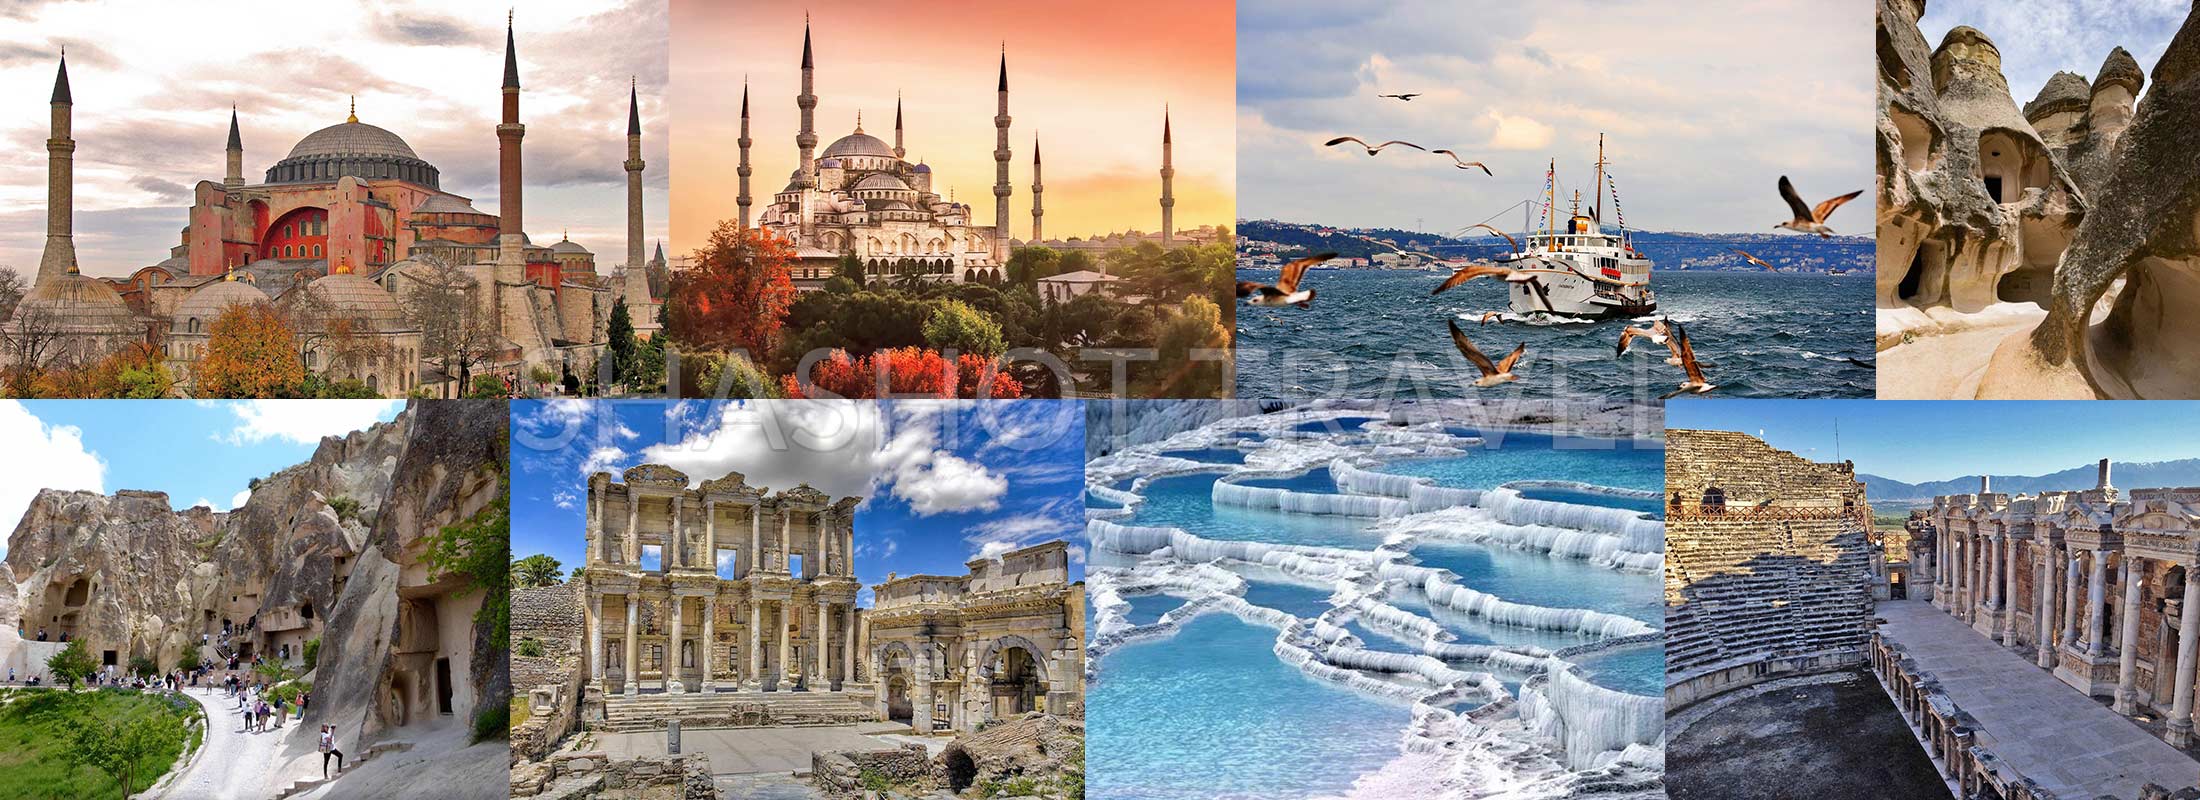 8-days-turkey-package-tours-istanbul-hagia-sophia-museum-blue-mosque-bosphorus-cappadocia-virgin-mary-hourse-ephesus-pamukkale-hierapolis